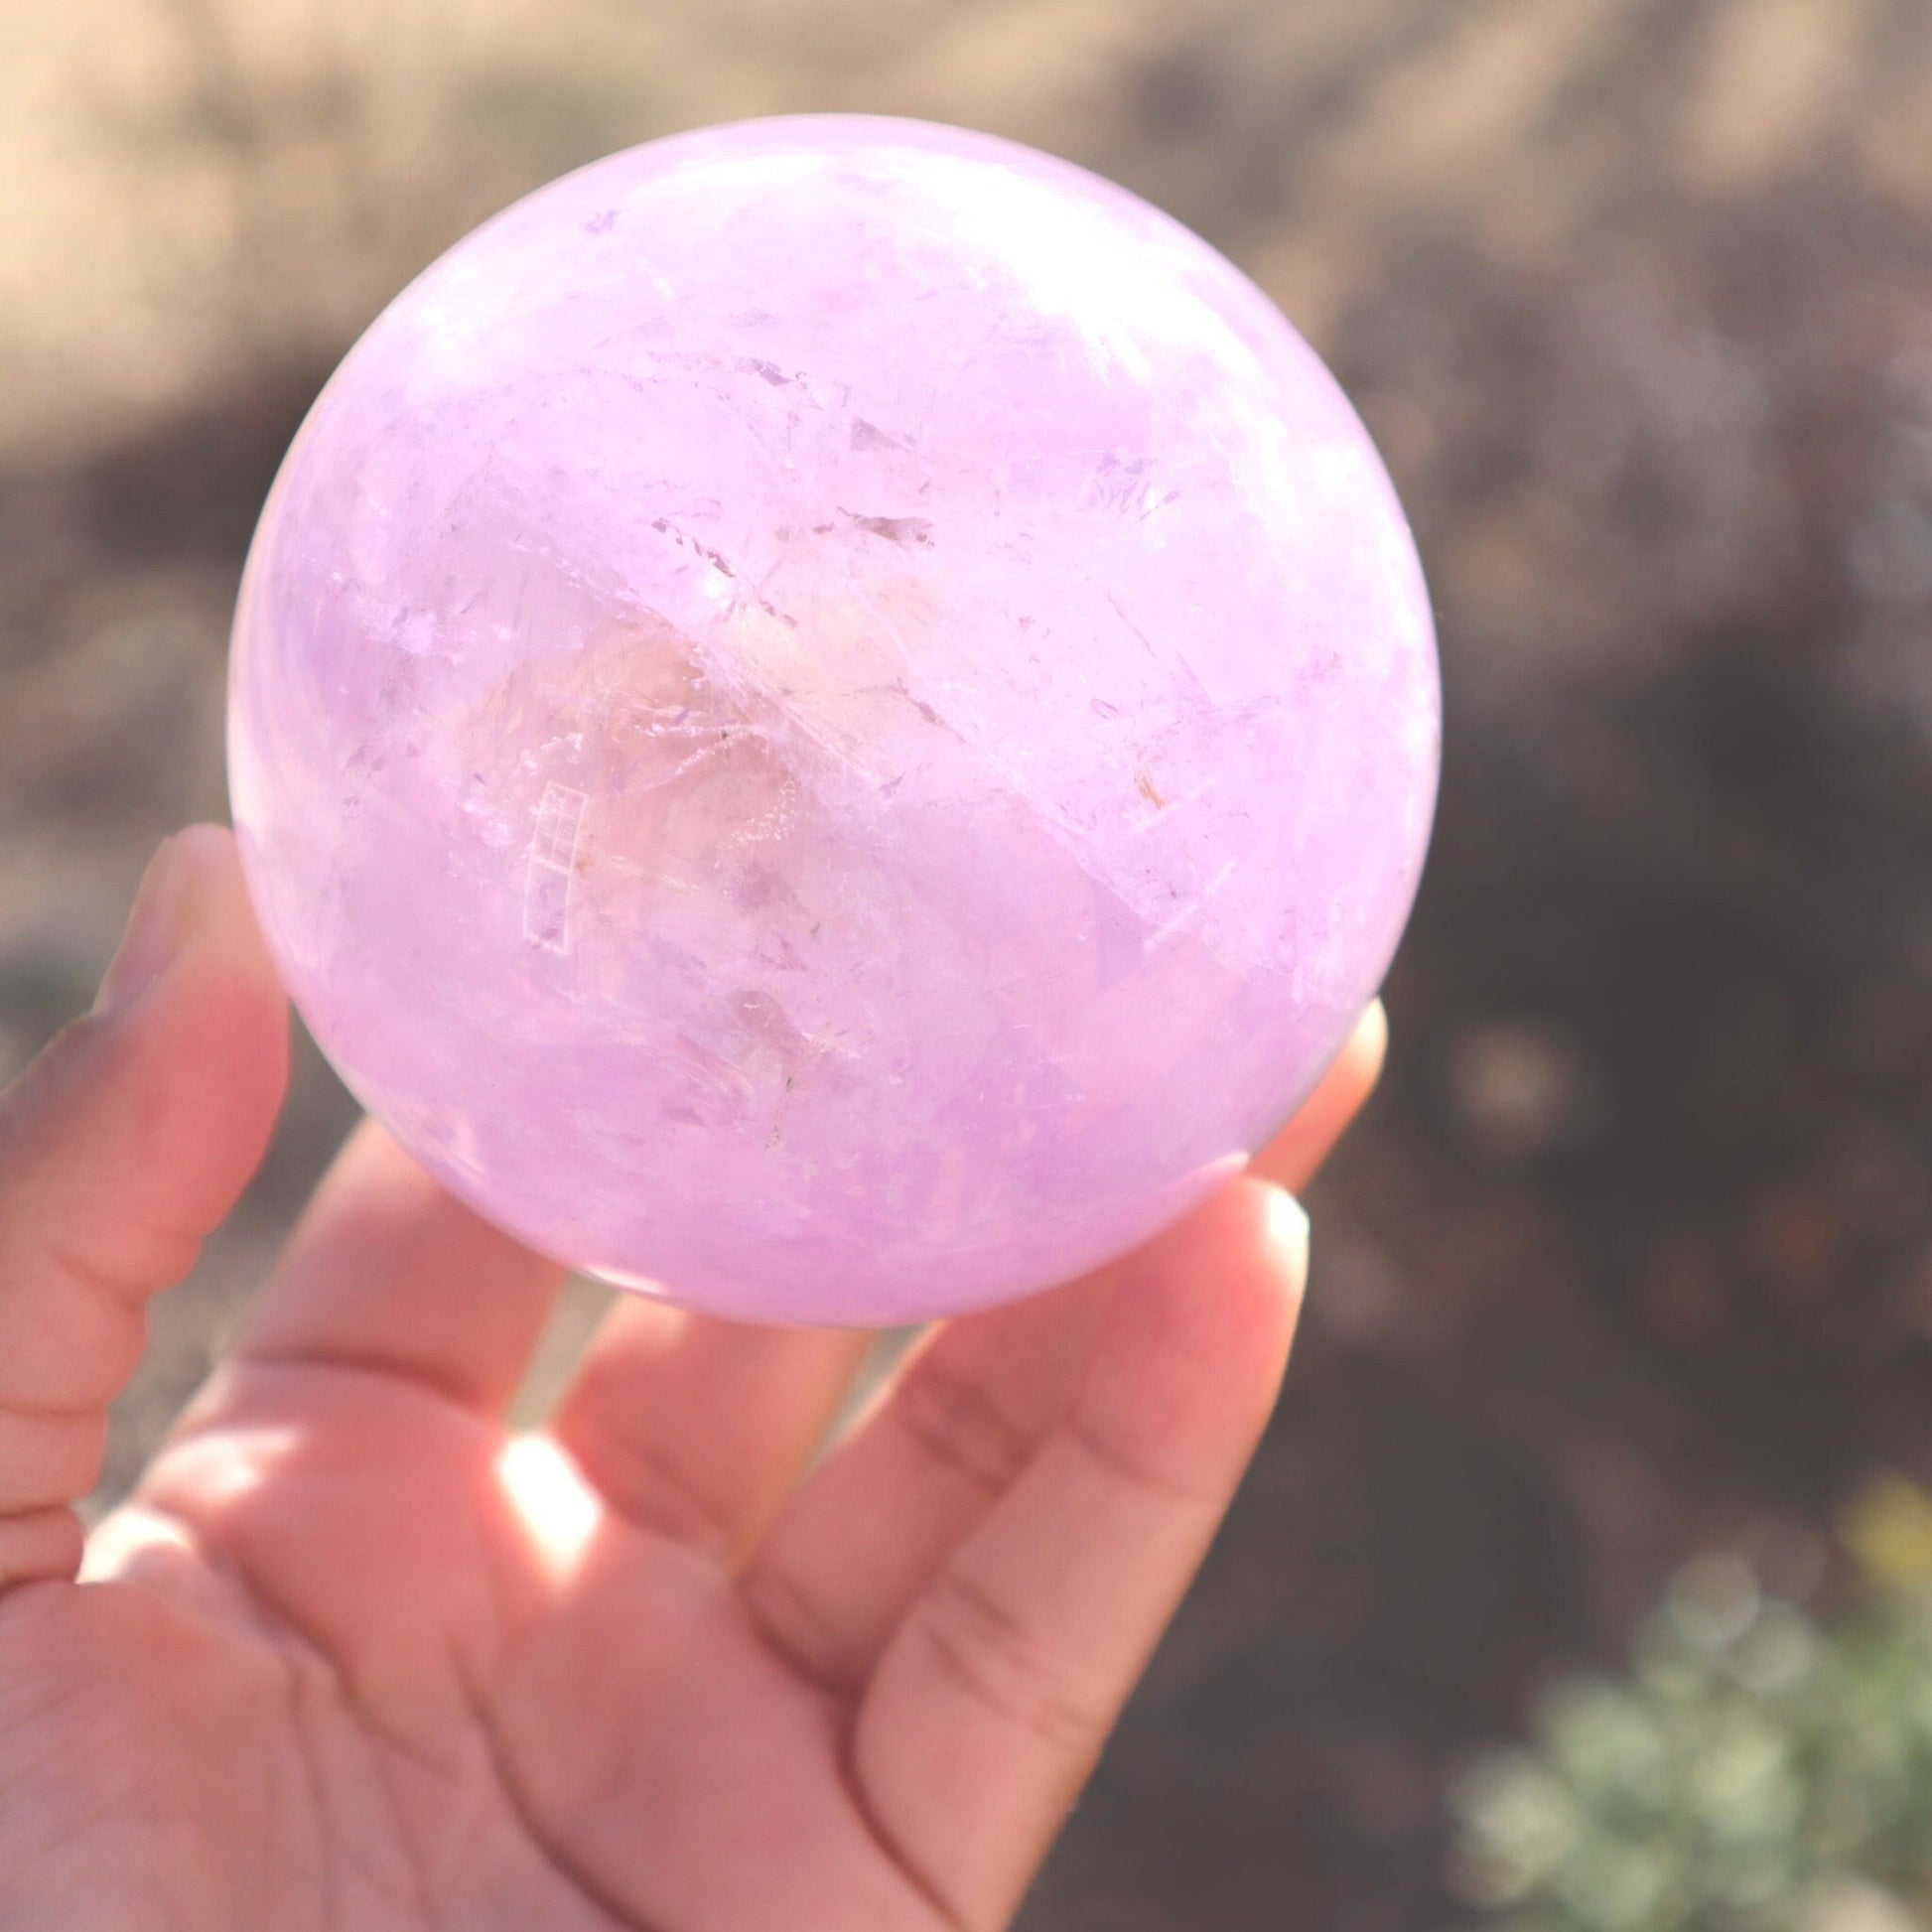 High Quality Amethyst Sphere, Big Crystal Sphere, Gemstone Rainbow Flash Amethyst Sphere, Natural Amethyst Quartz Crystal Ball, Large Sphere